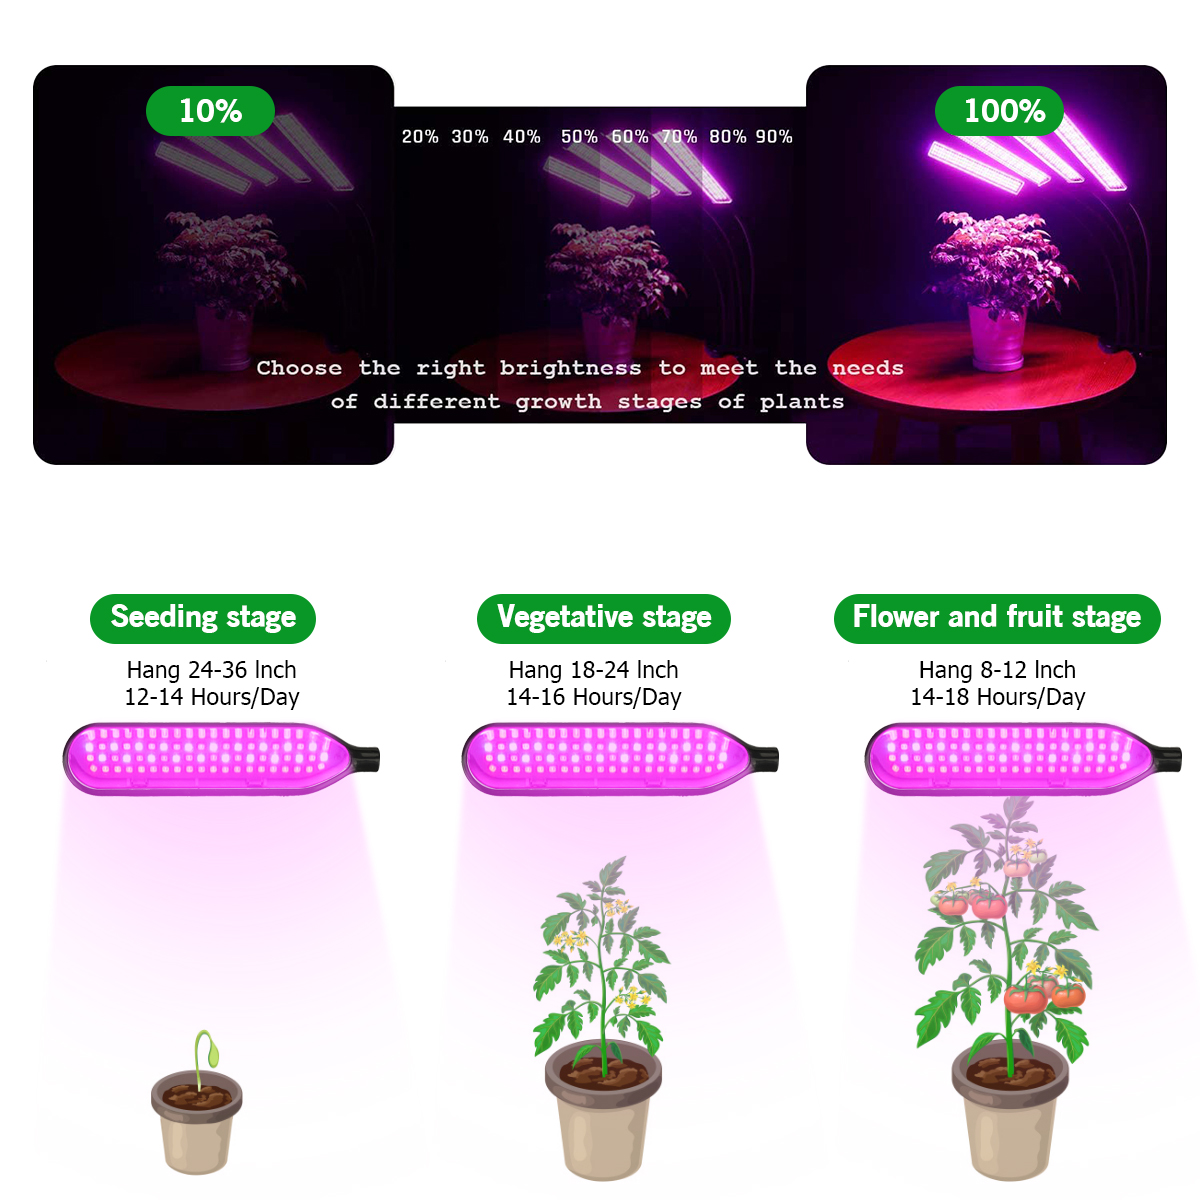 134-head-LED-Grow-Light-Full-Spectrum-Phyto-Lamp-USB-Clip-on-Grow-Lamp-for-Plants-Indoor-Seedlings-F-1937593-6